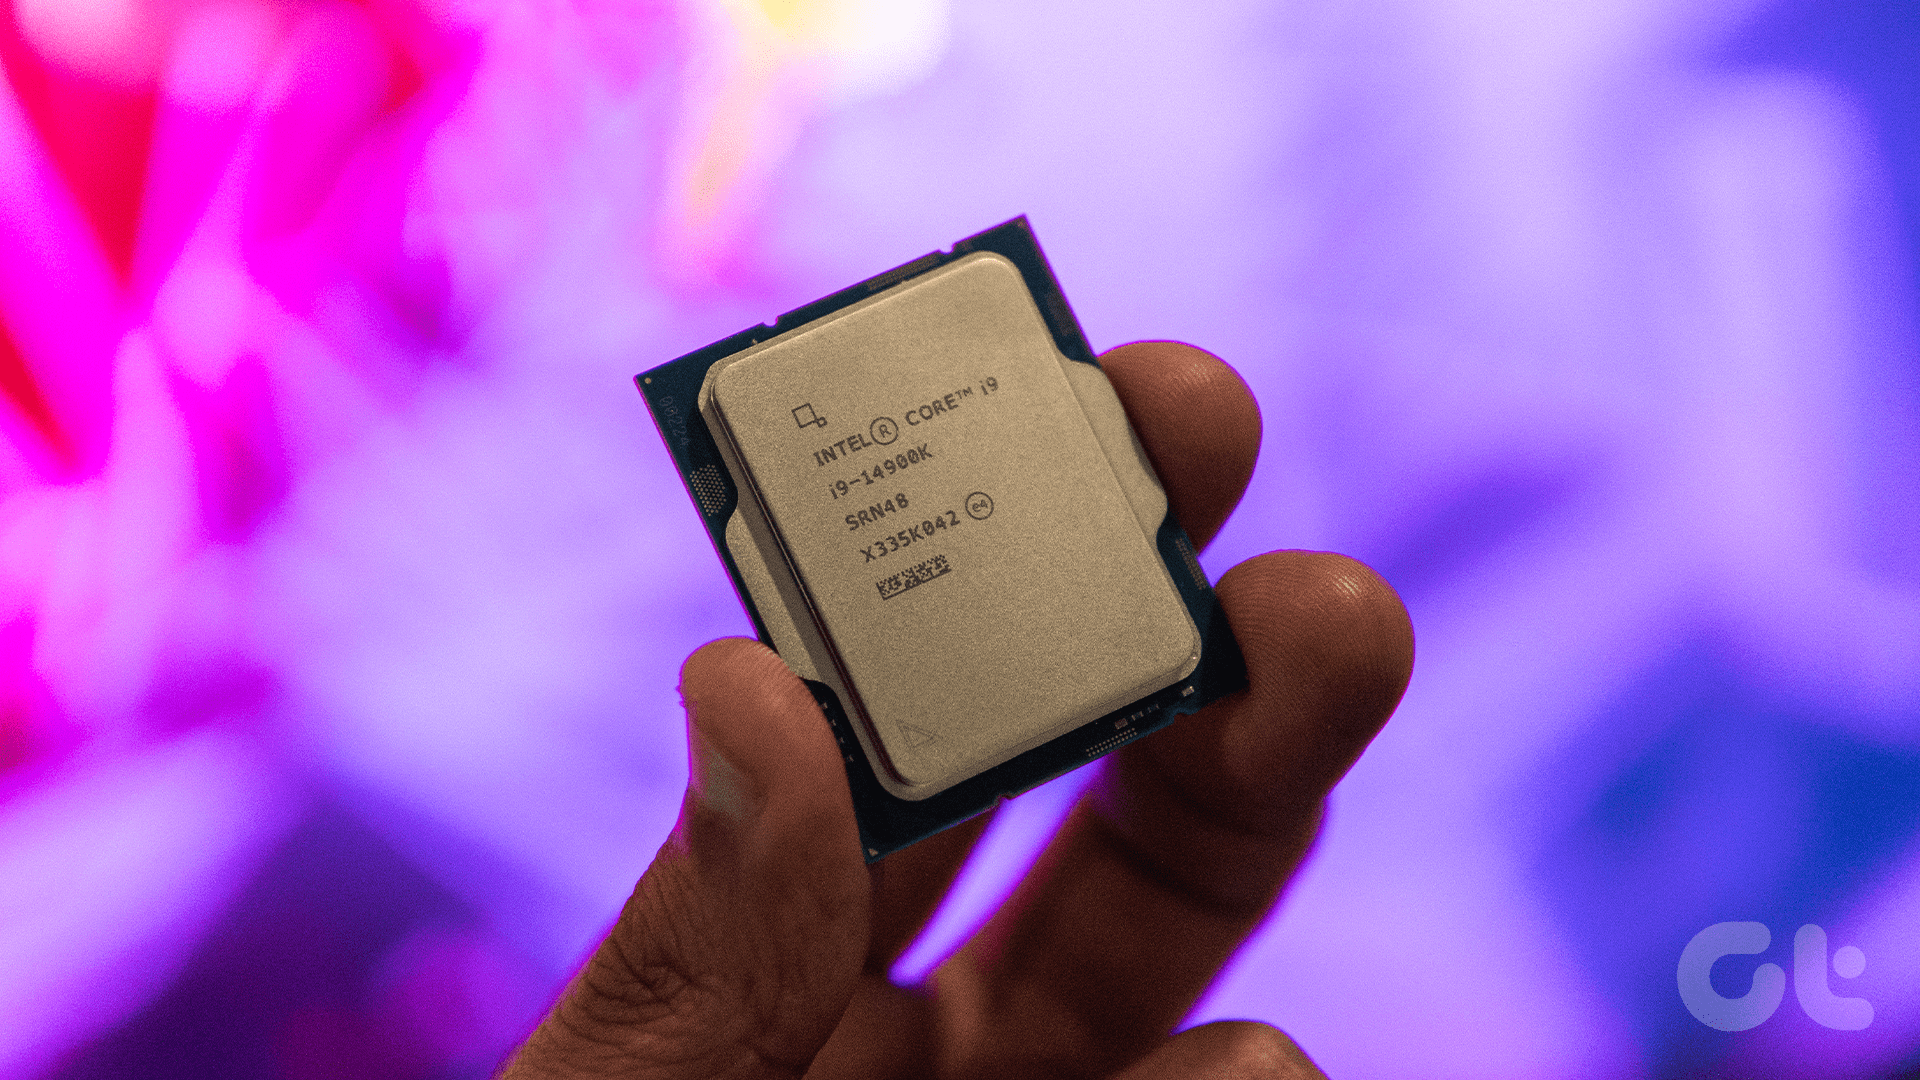 Intel Core i7-14700K and Core i9-14900K review: A mild CPU update